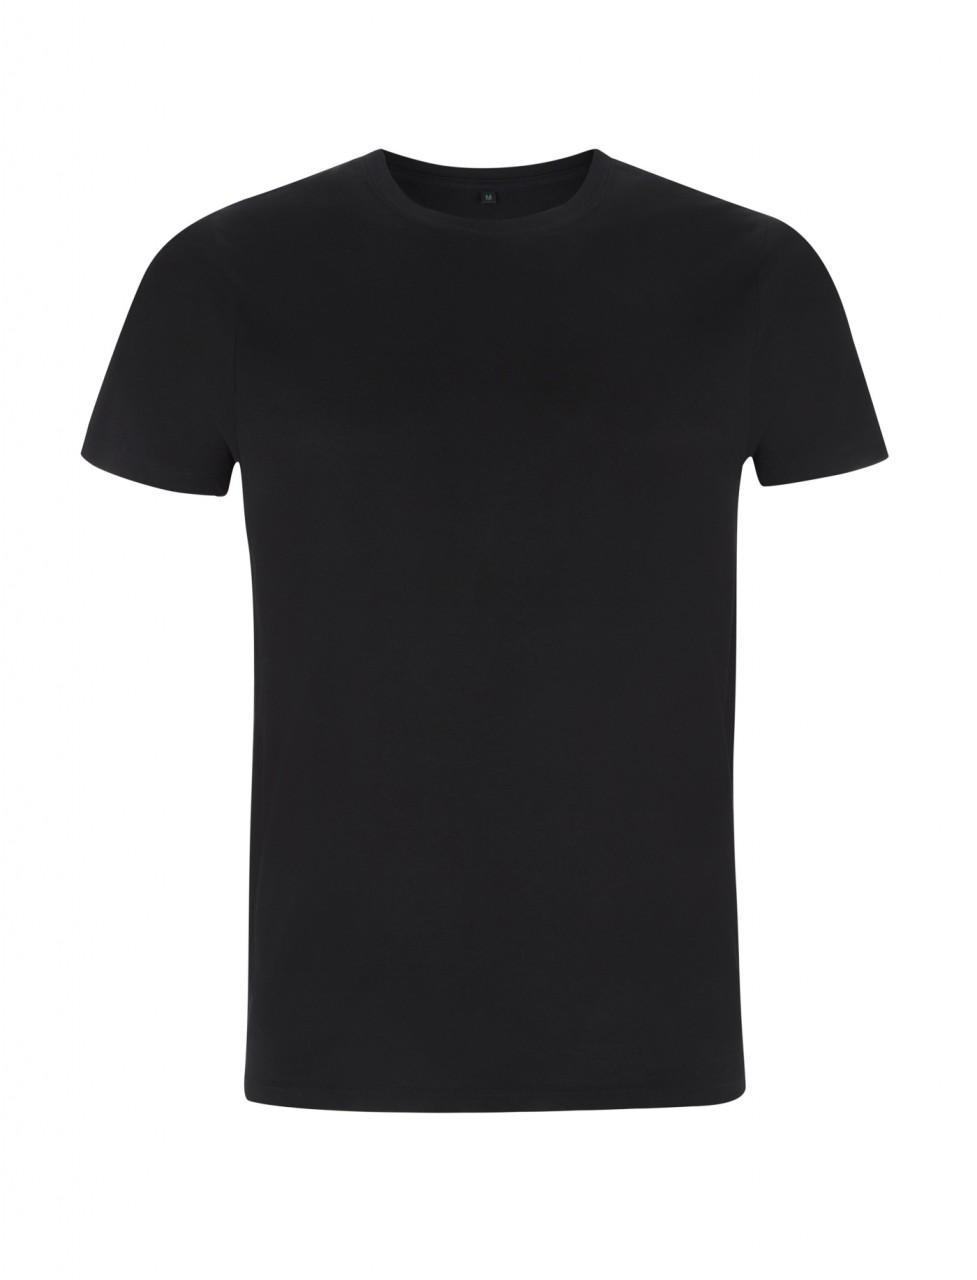 Earth Positive Unisex T-Shirt black - Continental Clothing - HERREN | T-Shirts | Unifarben & Streifen